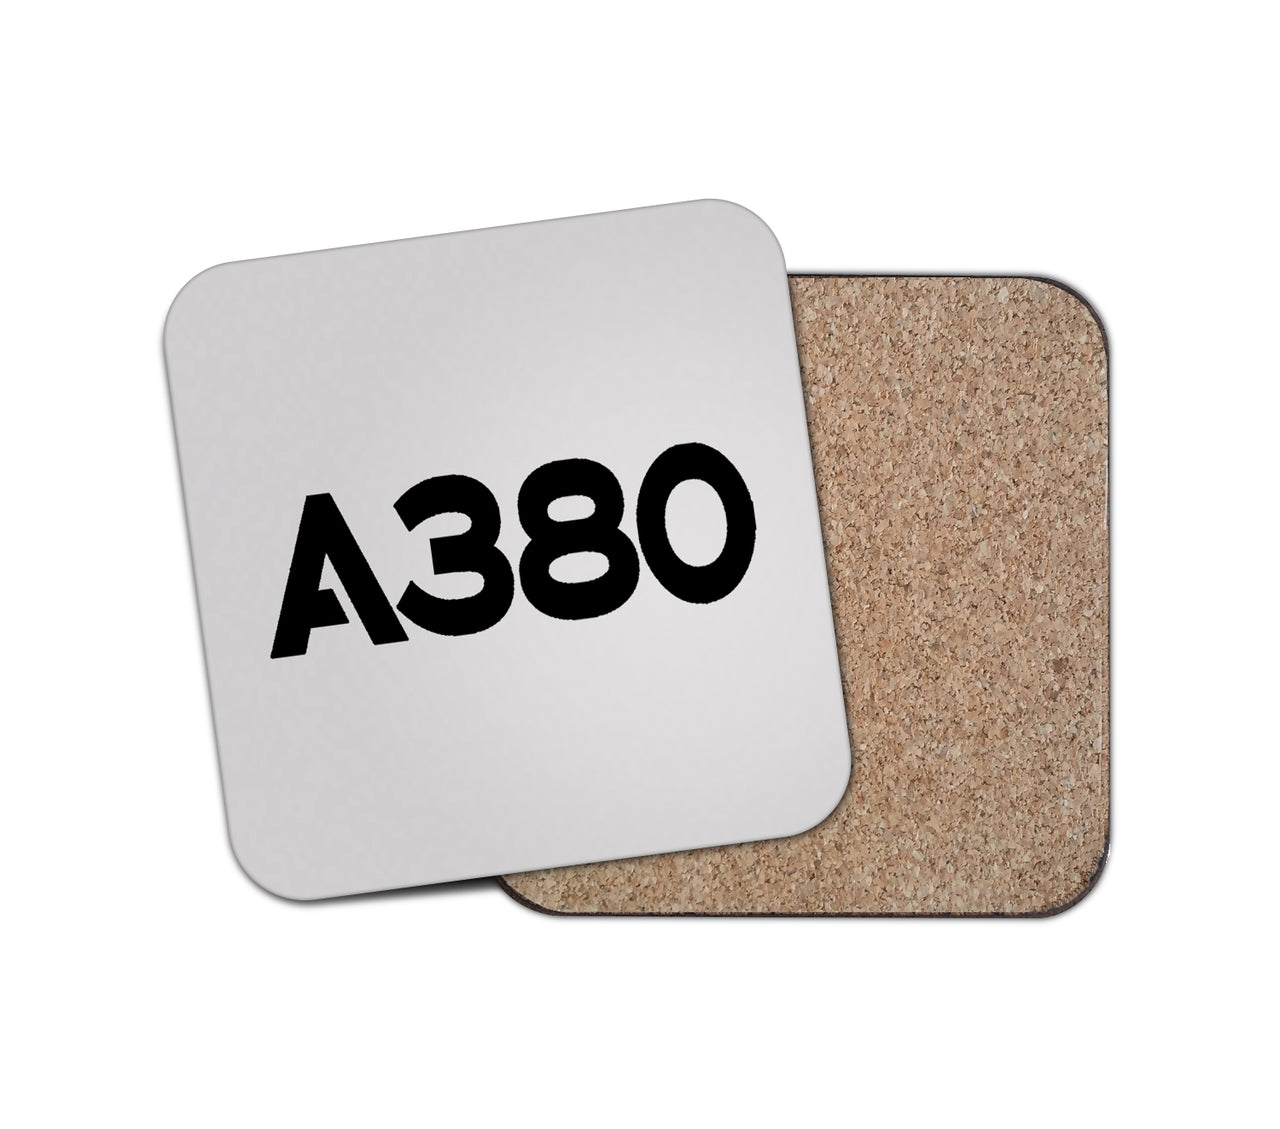 A380 Flat Text Designed Coasters